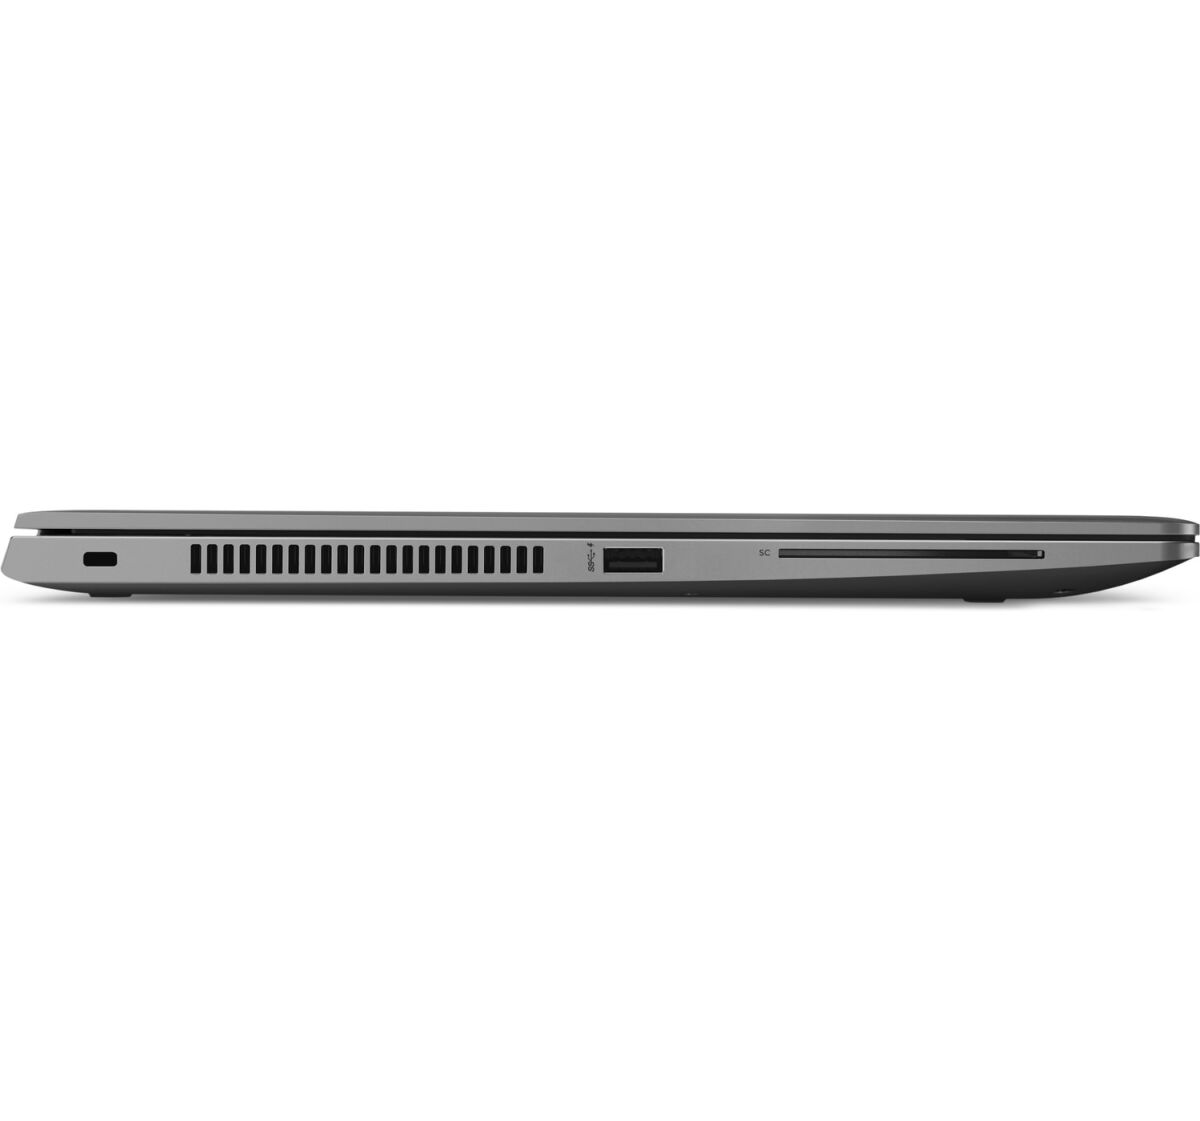 HP ZBook 15u G6 - 7PU22PA laptop specifications